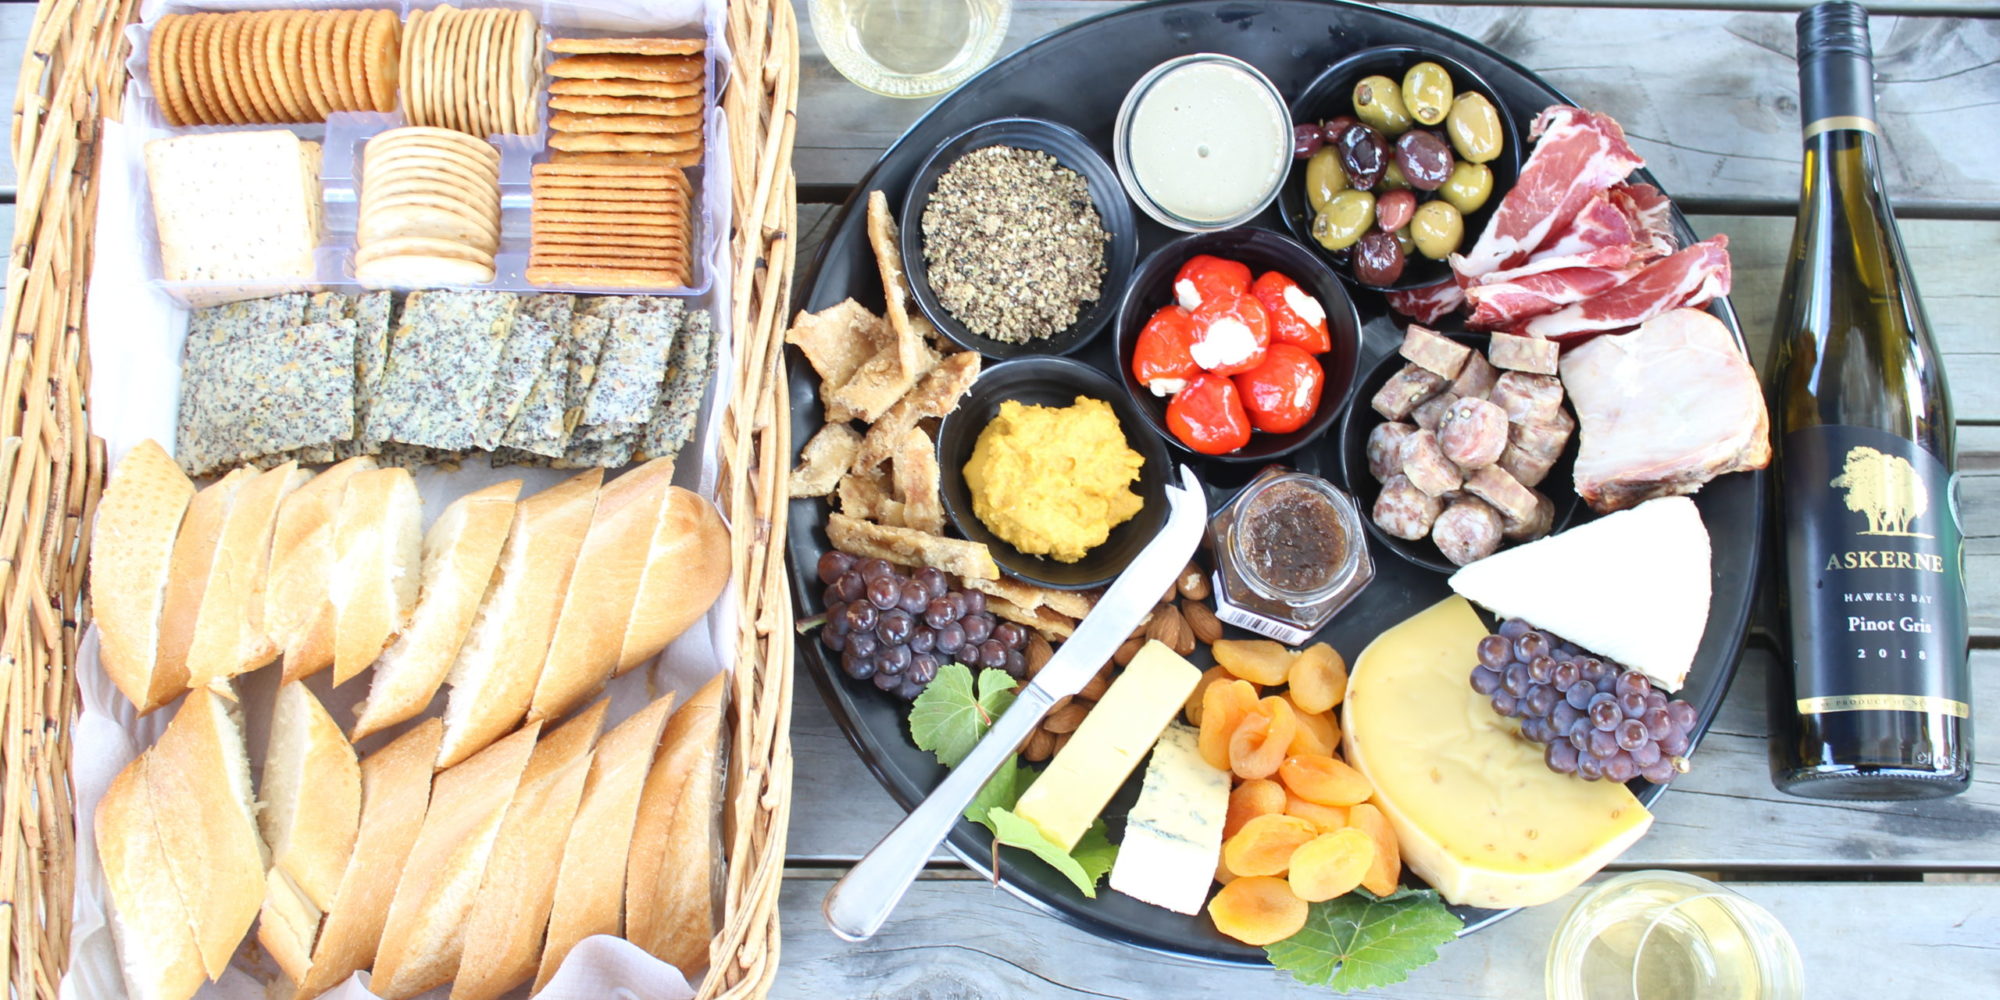 Award winning cellardoor experience build your own gourmet picnics